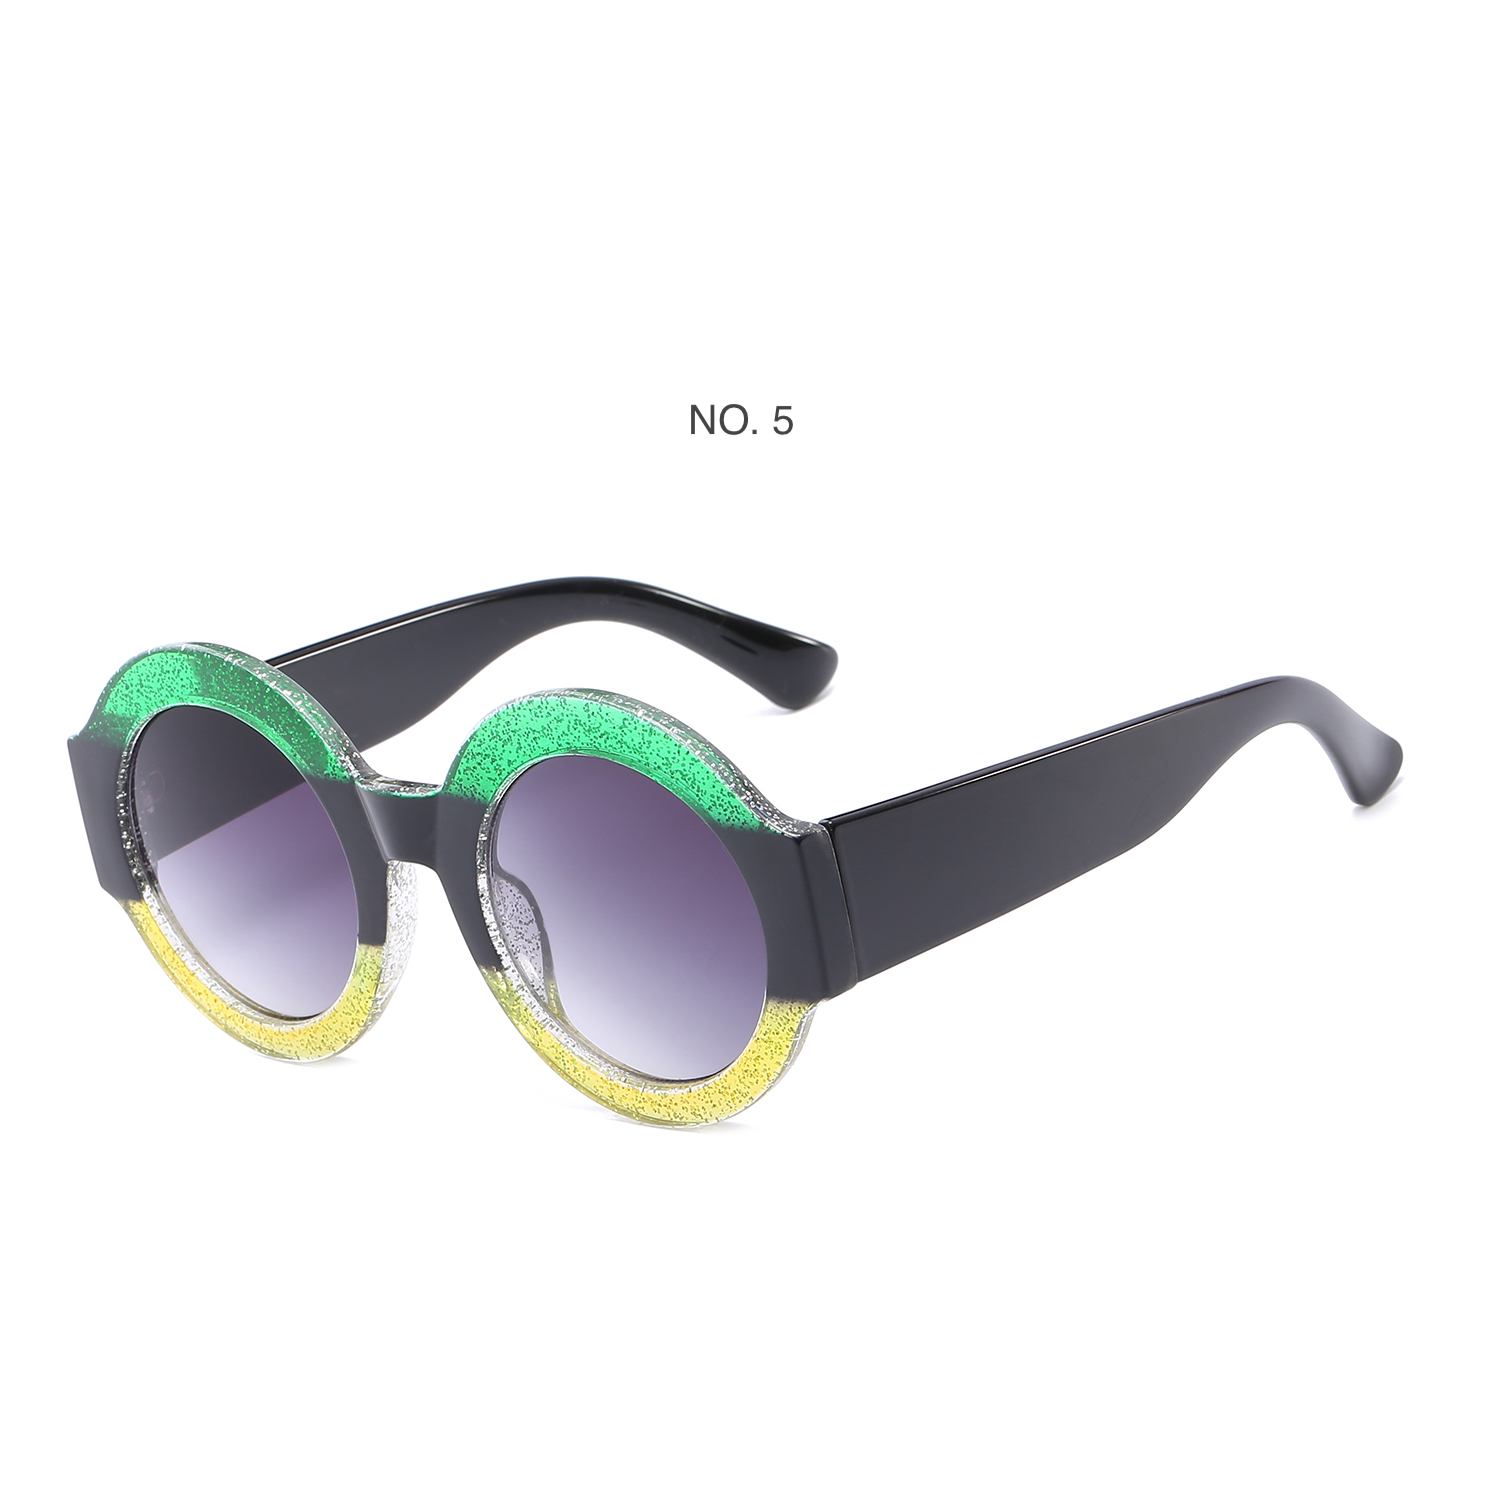 Sunglasses Manufacturer, Trendy Sunglasses, Eyewear Sunglasses